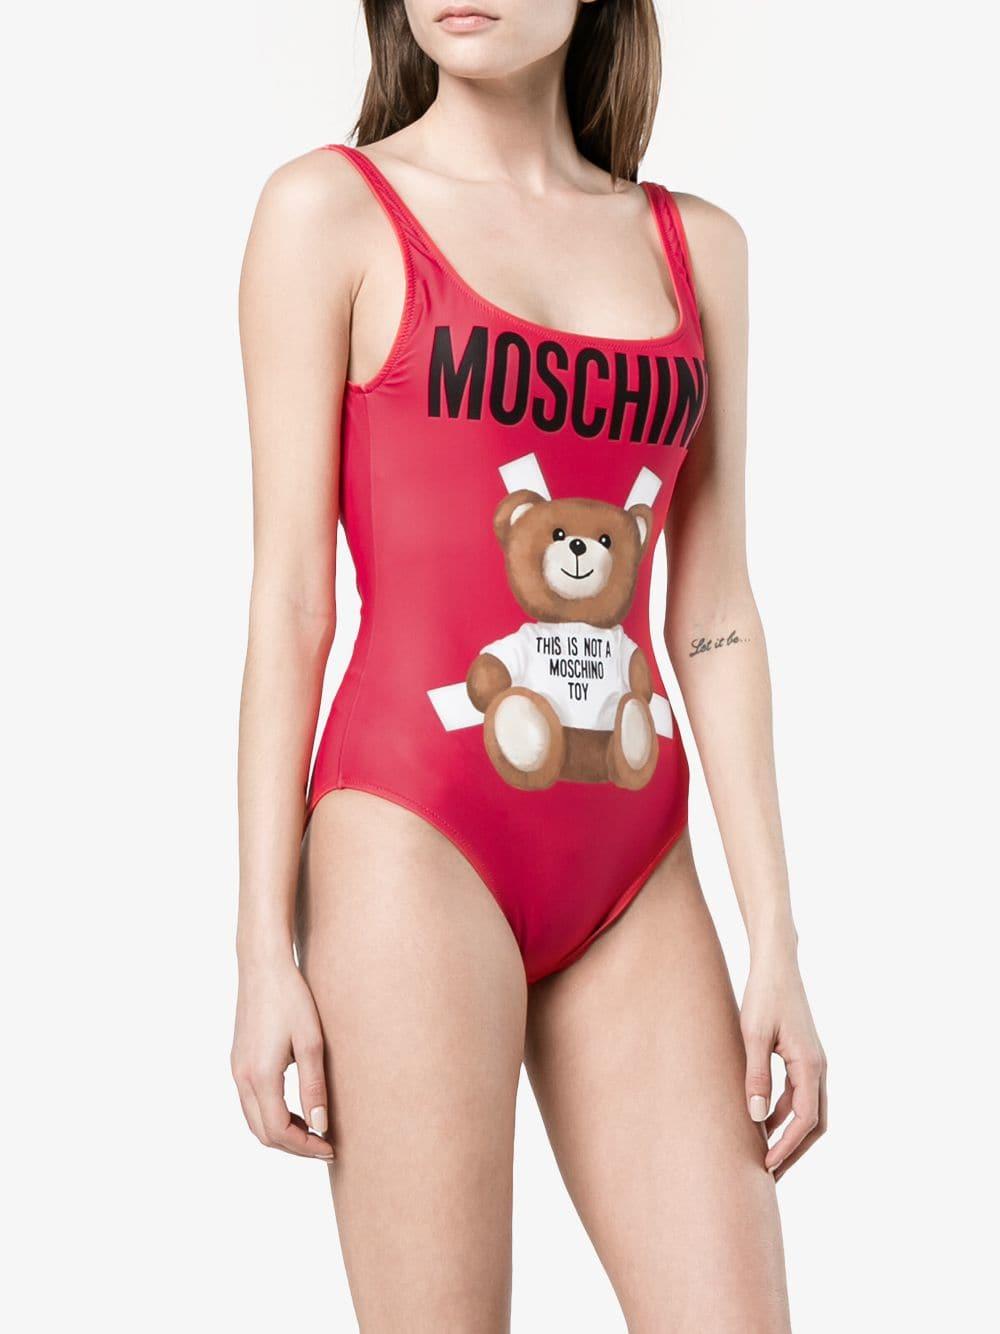 moschino bathing suit